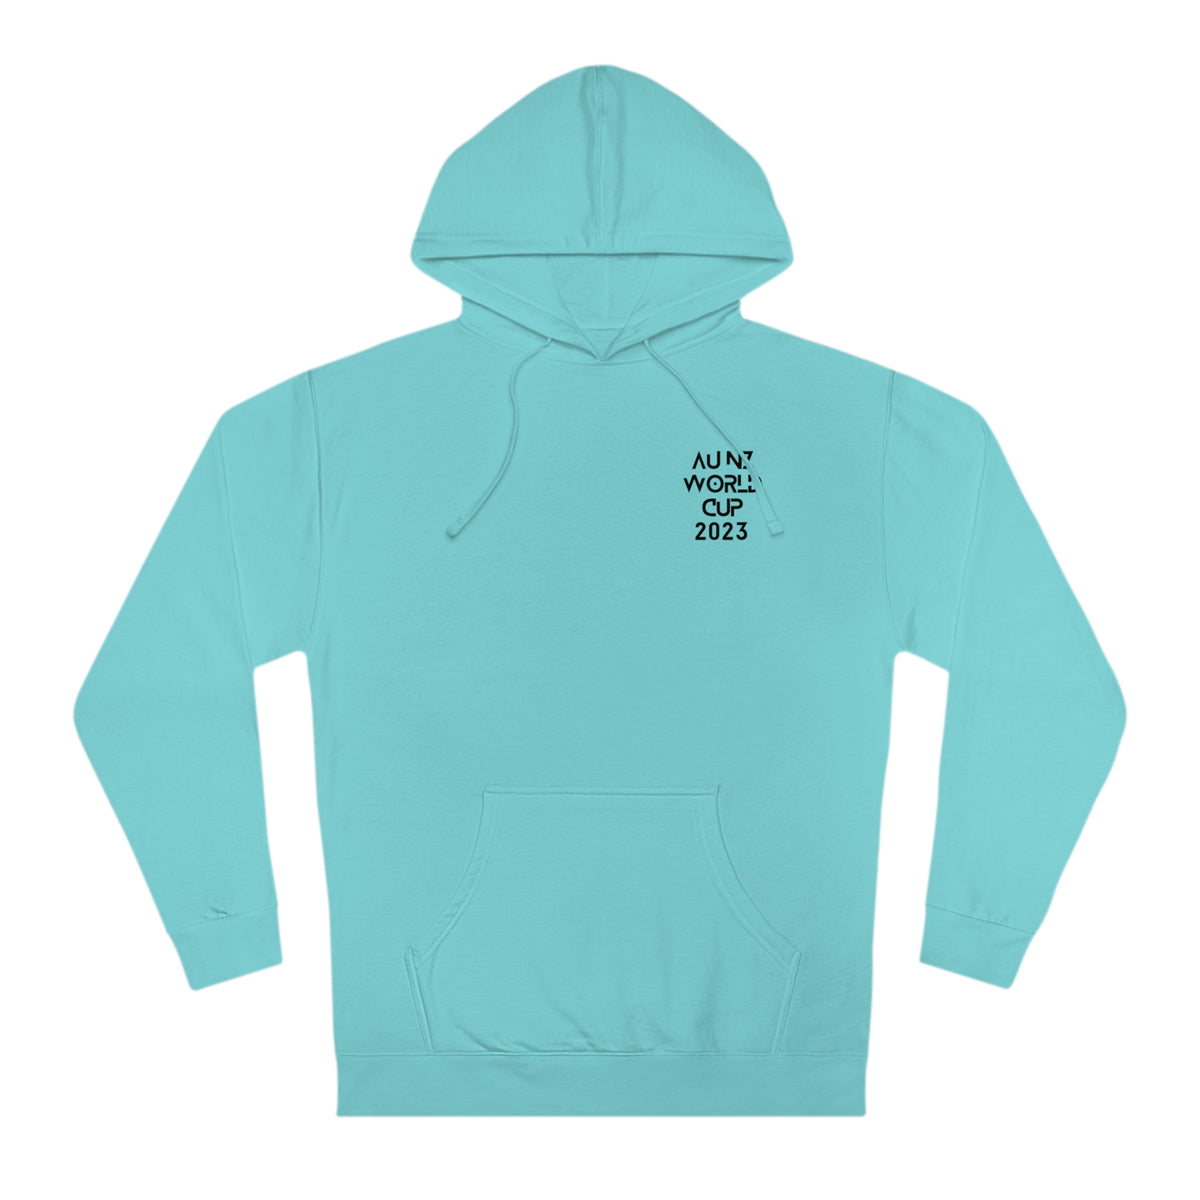 Limited Edition AU-NZ World Cup Adult Hooded Sweatshirt